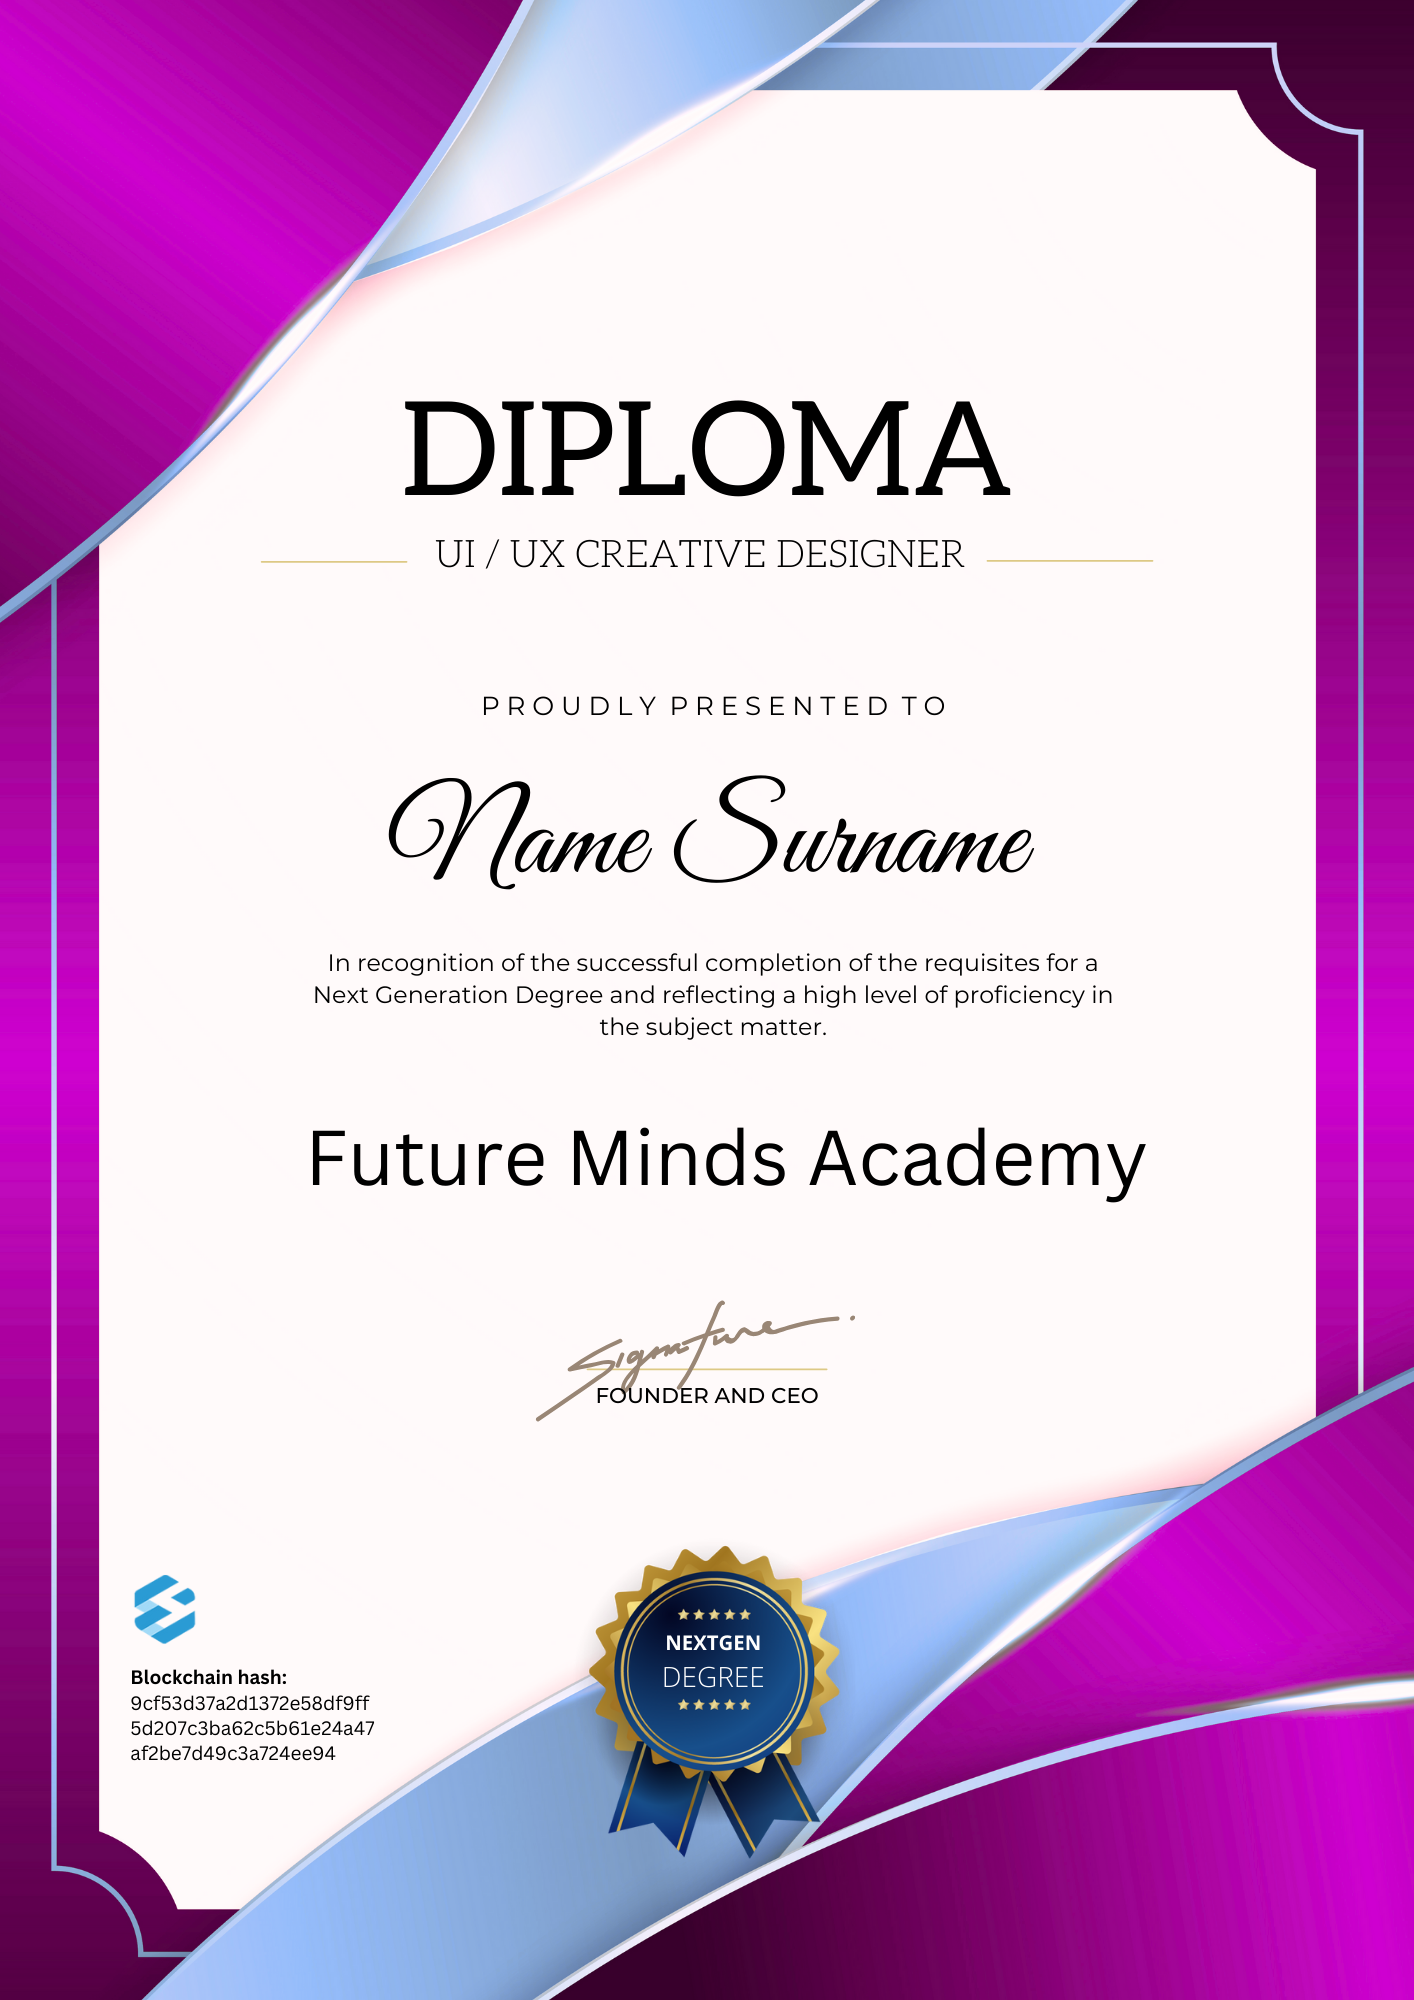 Diploma UI UX Creative Designer